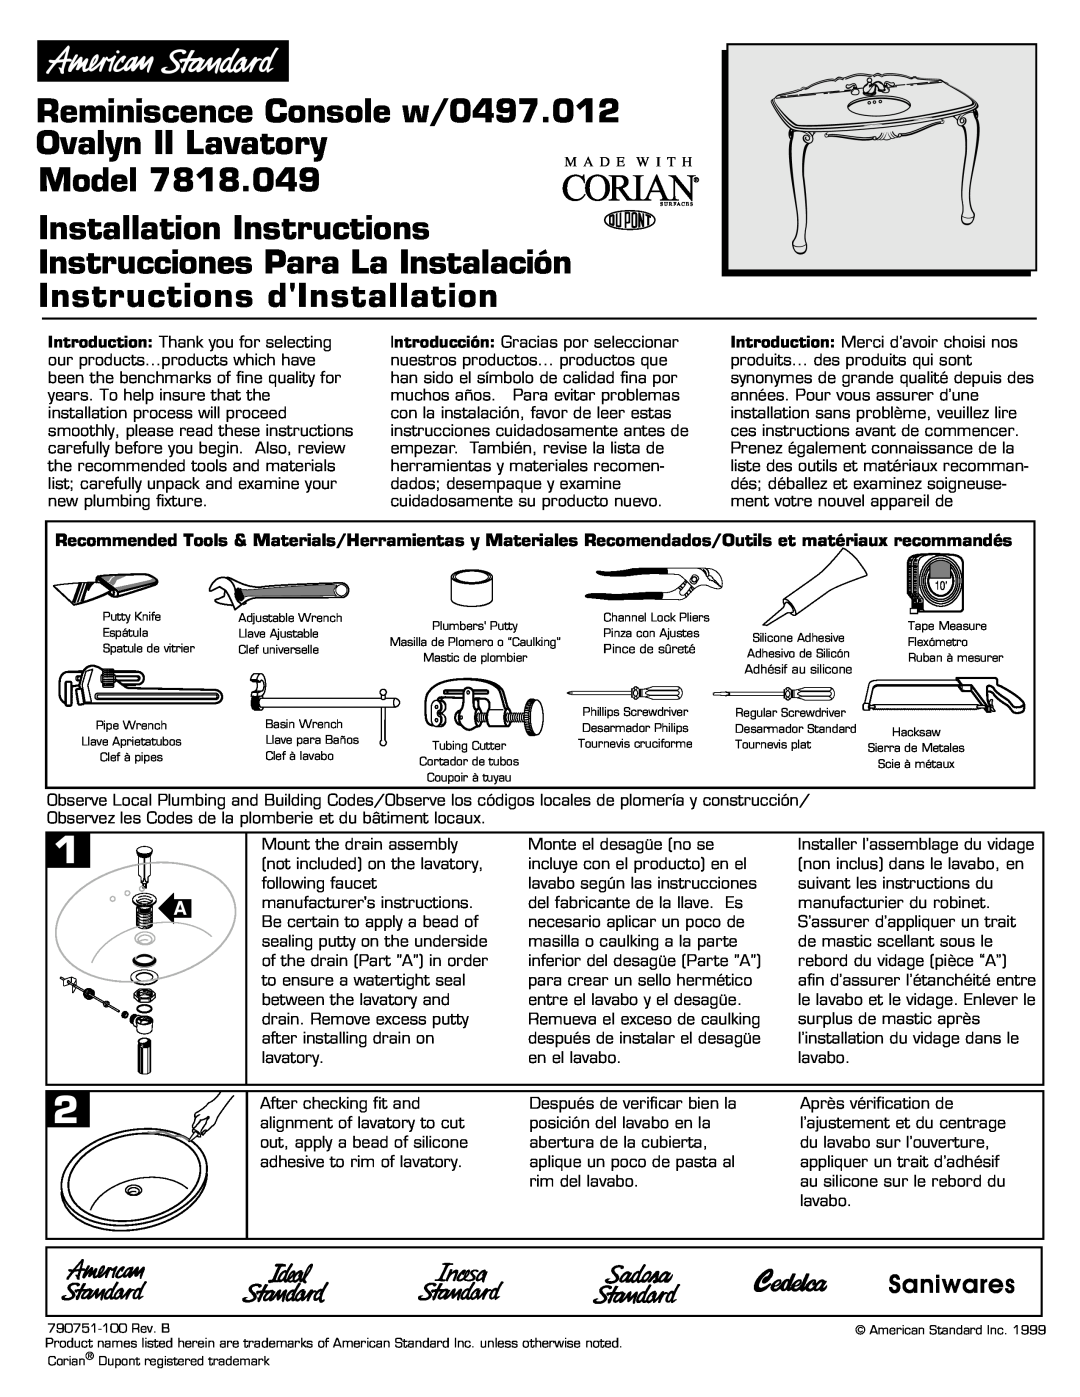 American Standard 7818.049 installation instructions Model, Saniwares 